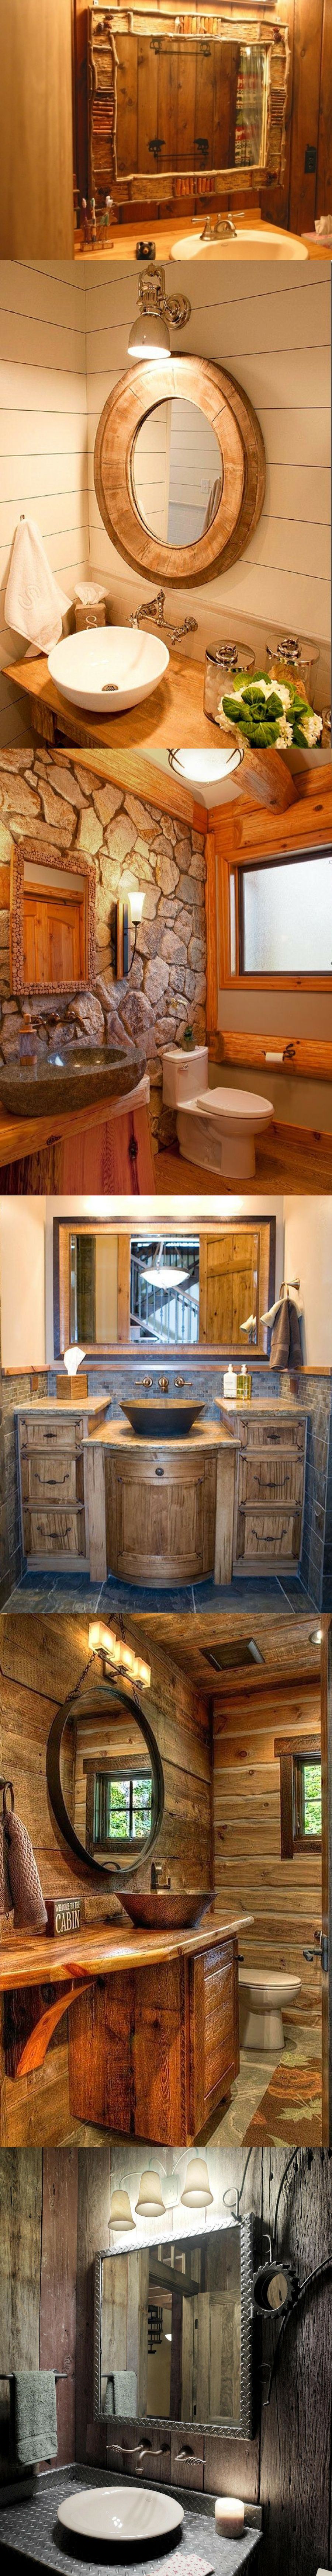 master bathroom mirror ideas